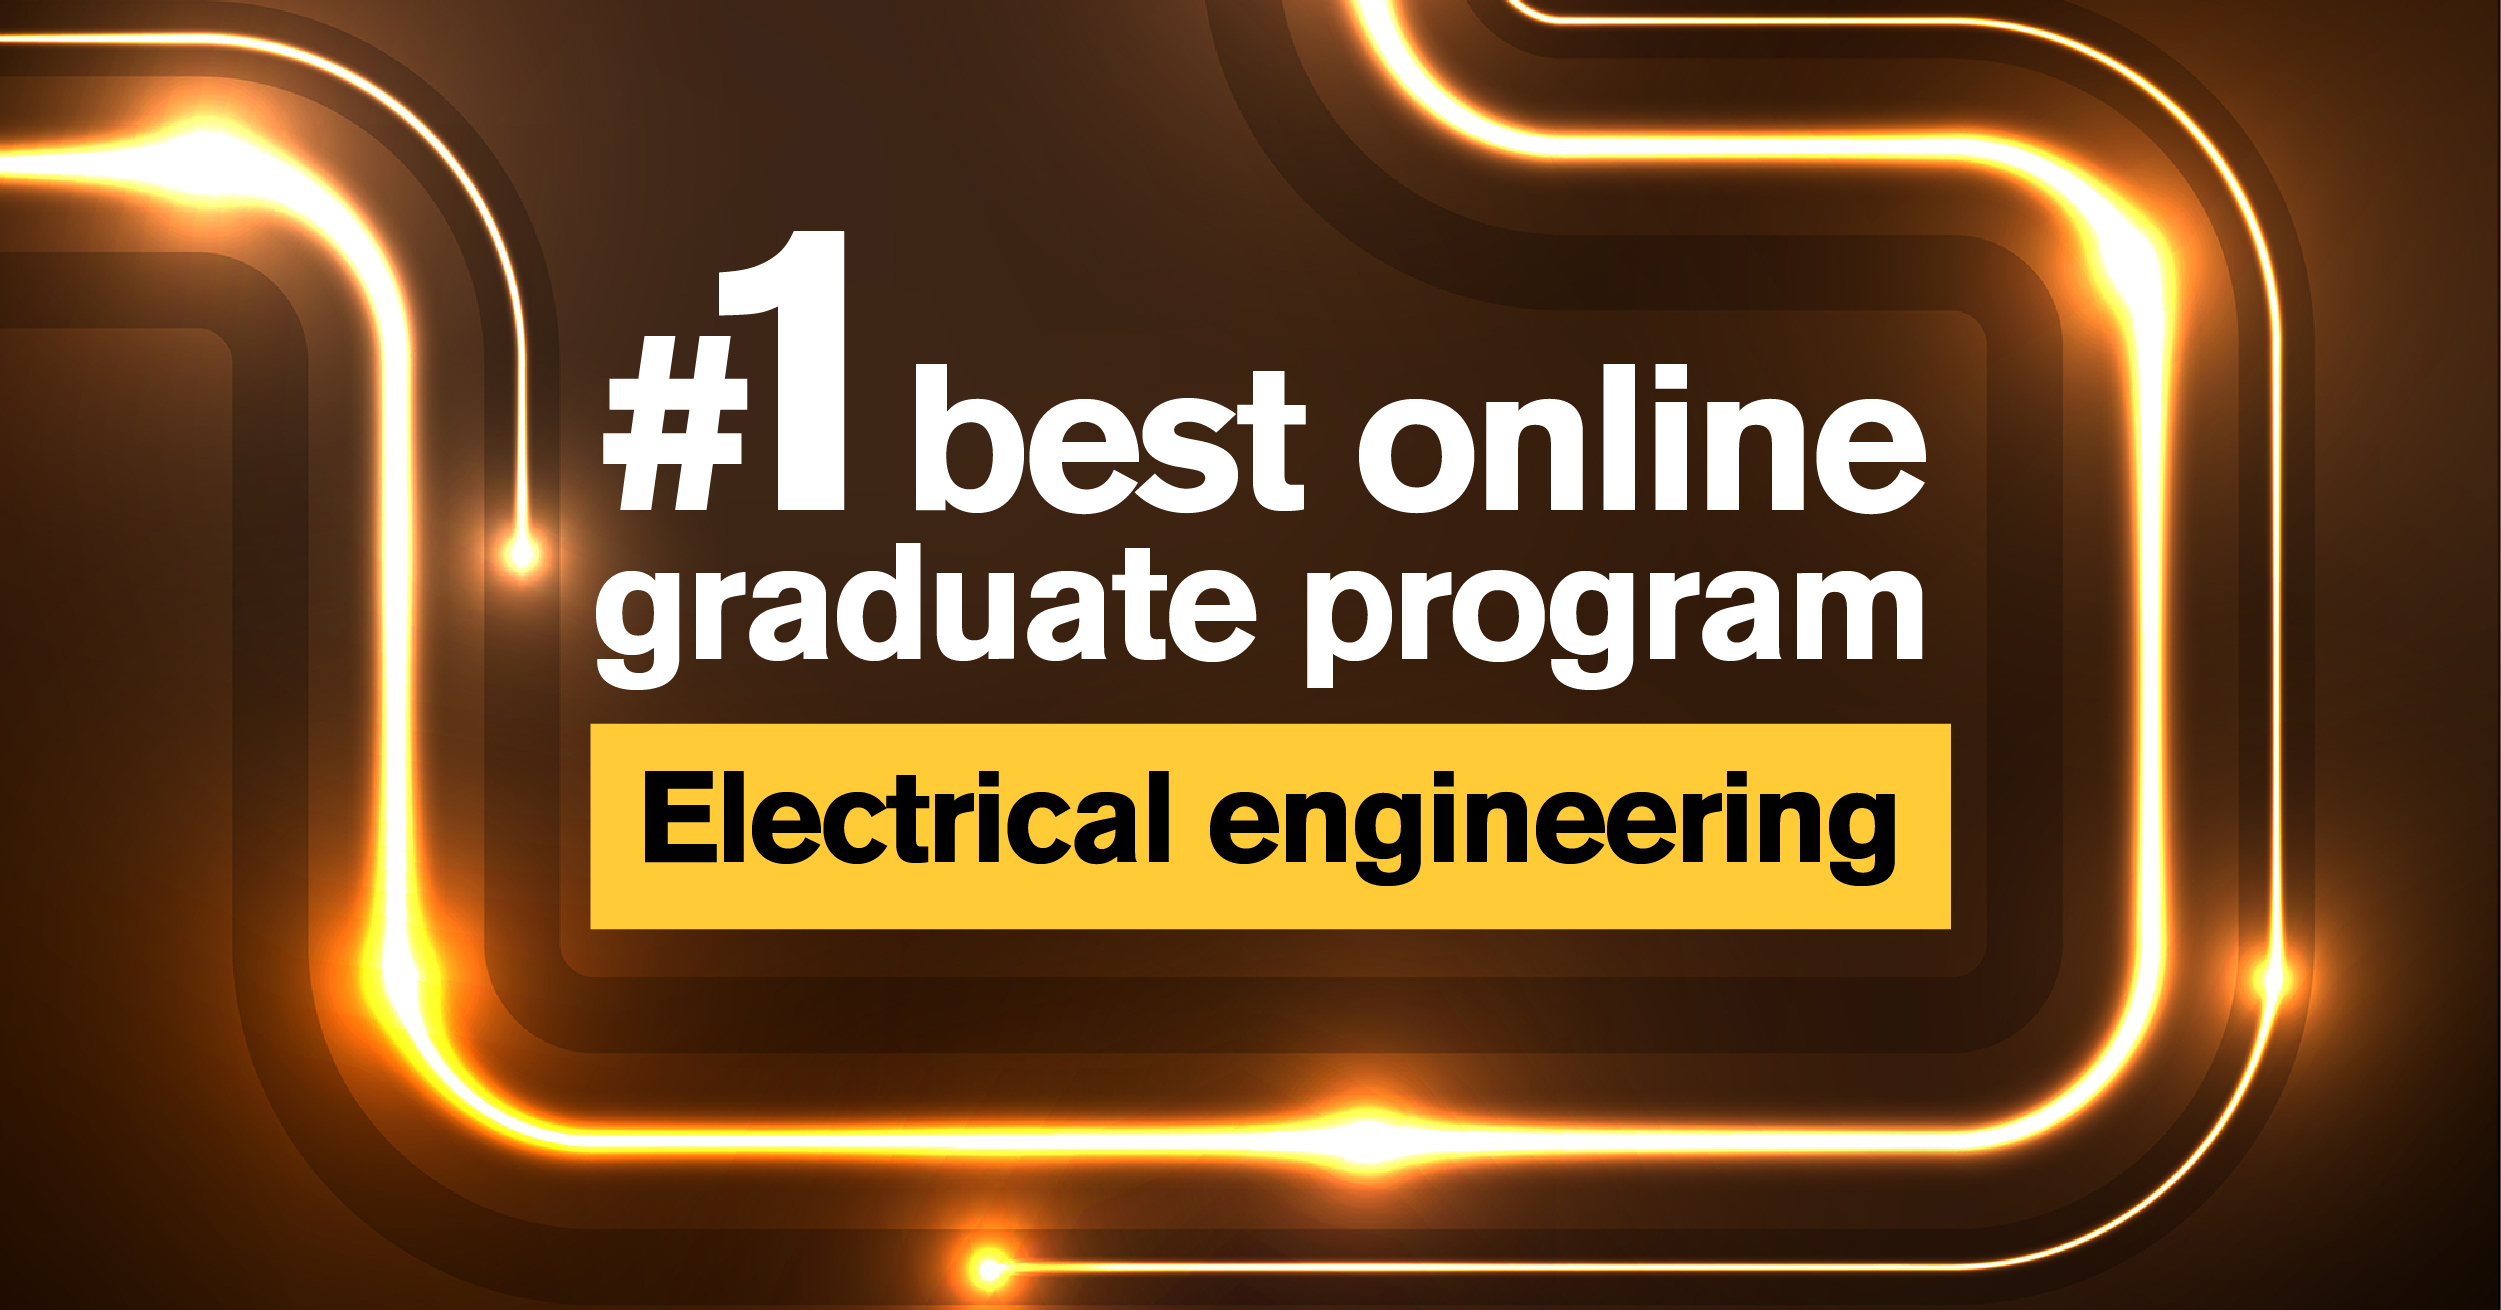 ASU online electrical engineering master’s program ranks No. 1 in nation